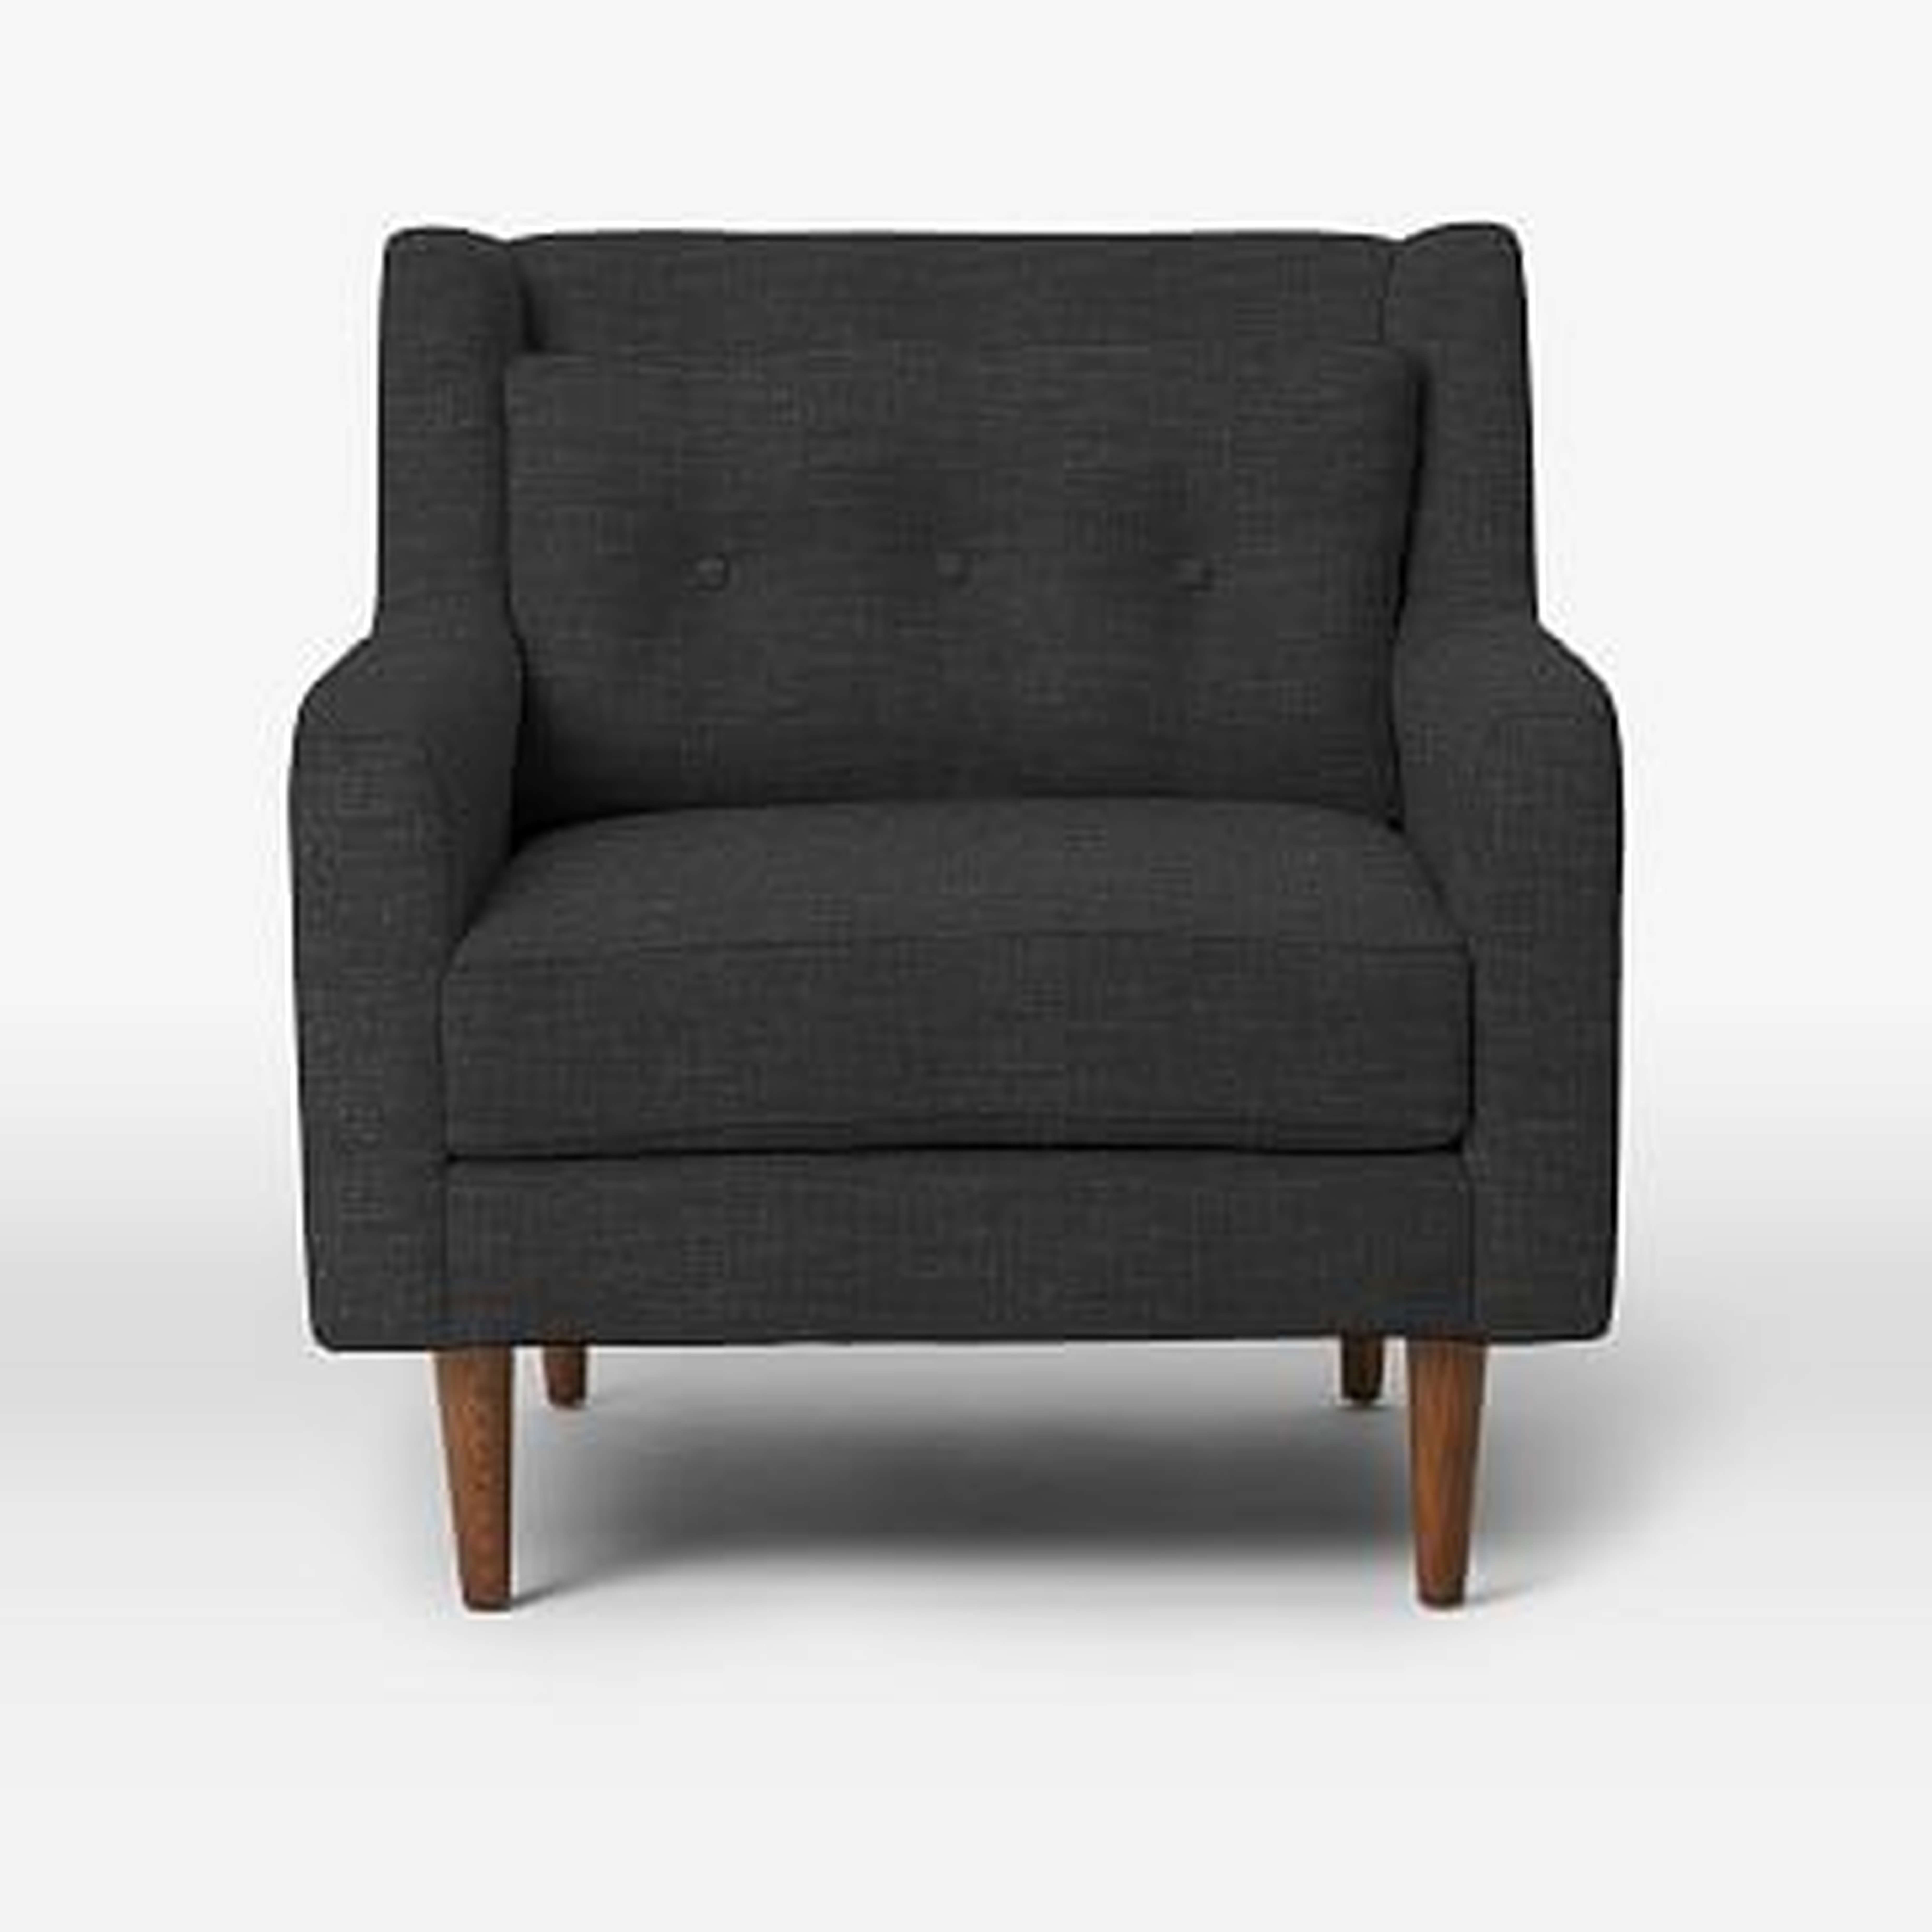 Crosby Arm Chair, Heathered Tweed, Charcoal - West Elm